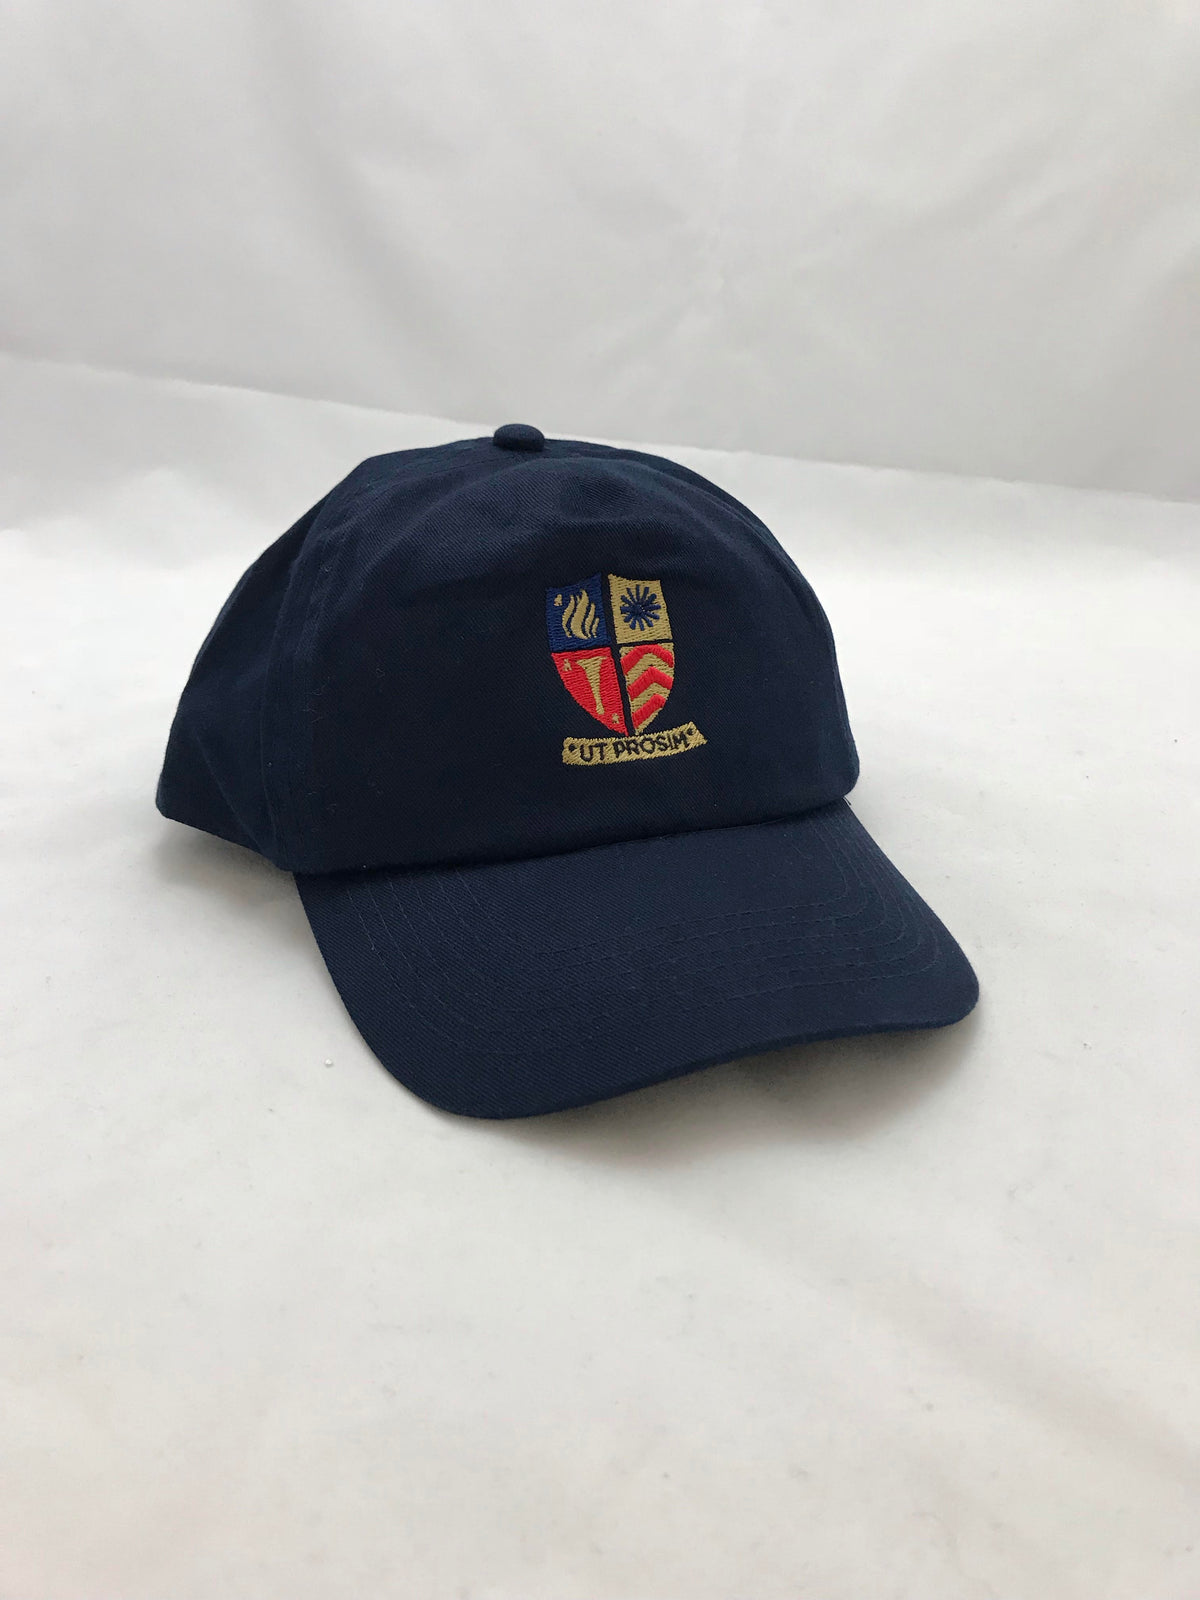 Ryde School Cricket Cap